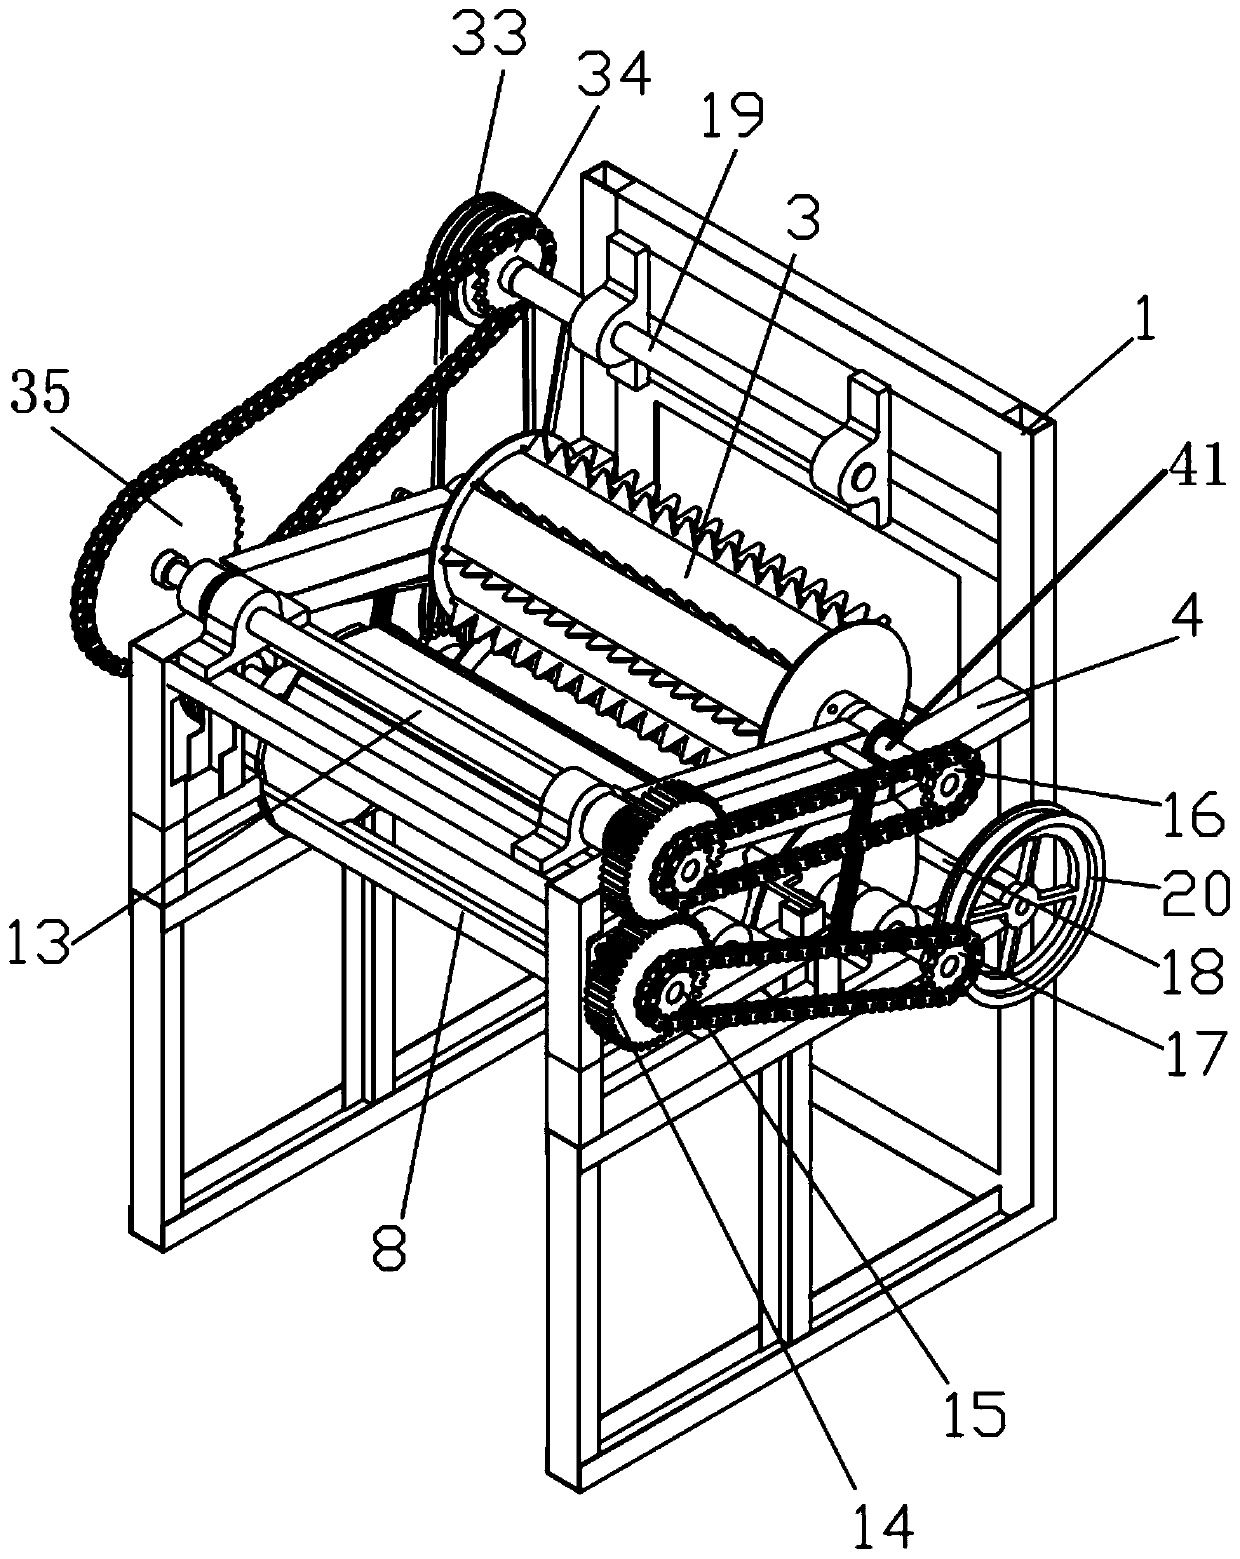 Roller-type feeding and shredding device